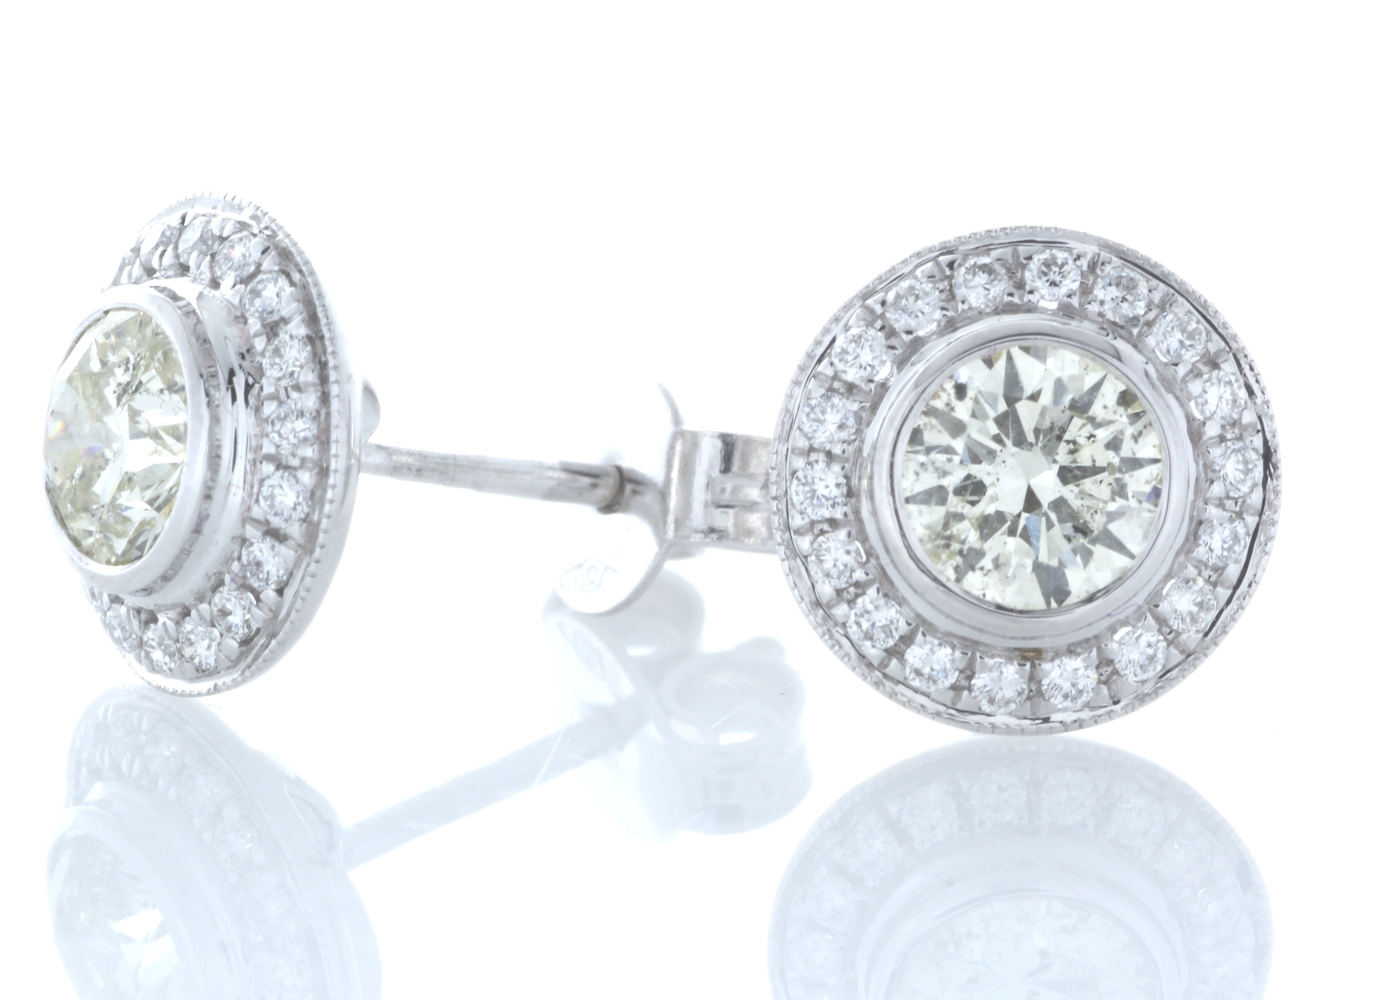 18ct White Gold Halo Set Diamond Earrings 1.20 Carats - Image 2 of 4